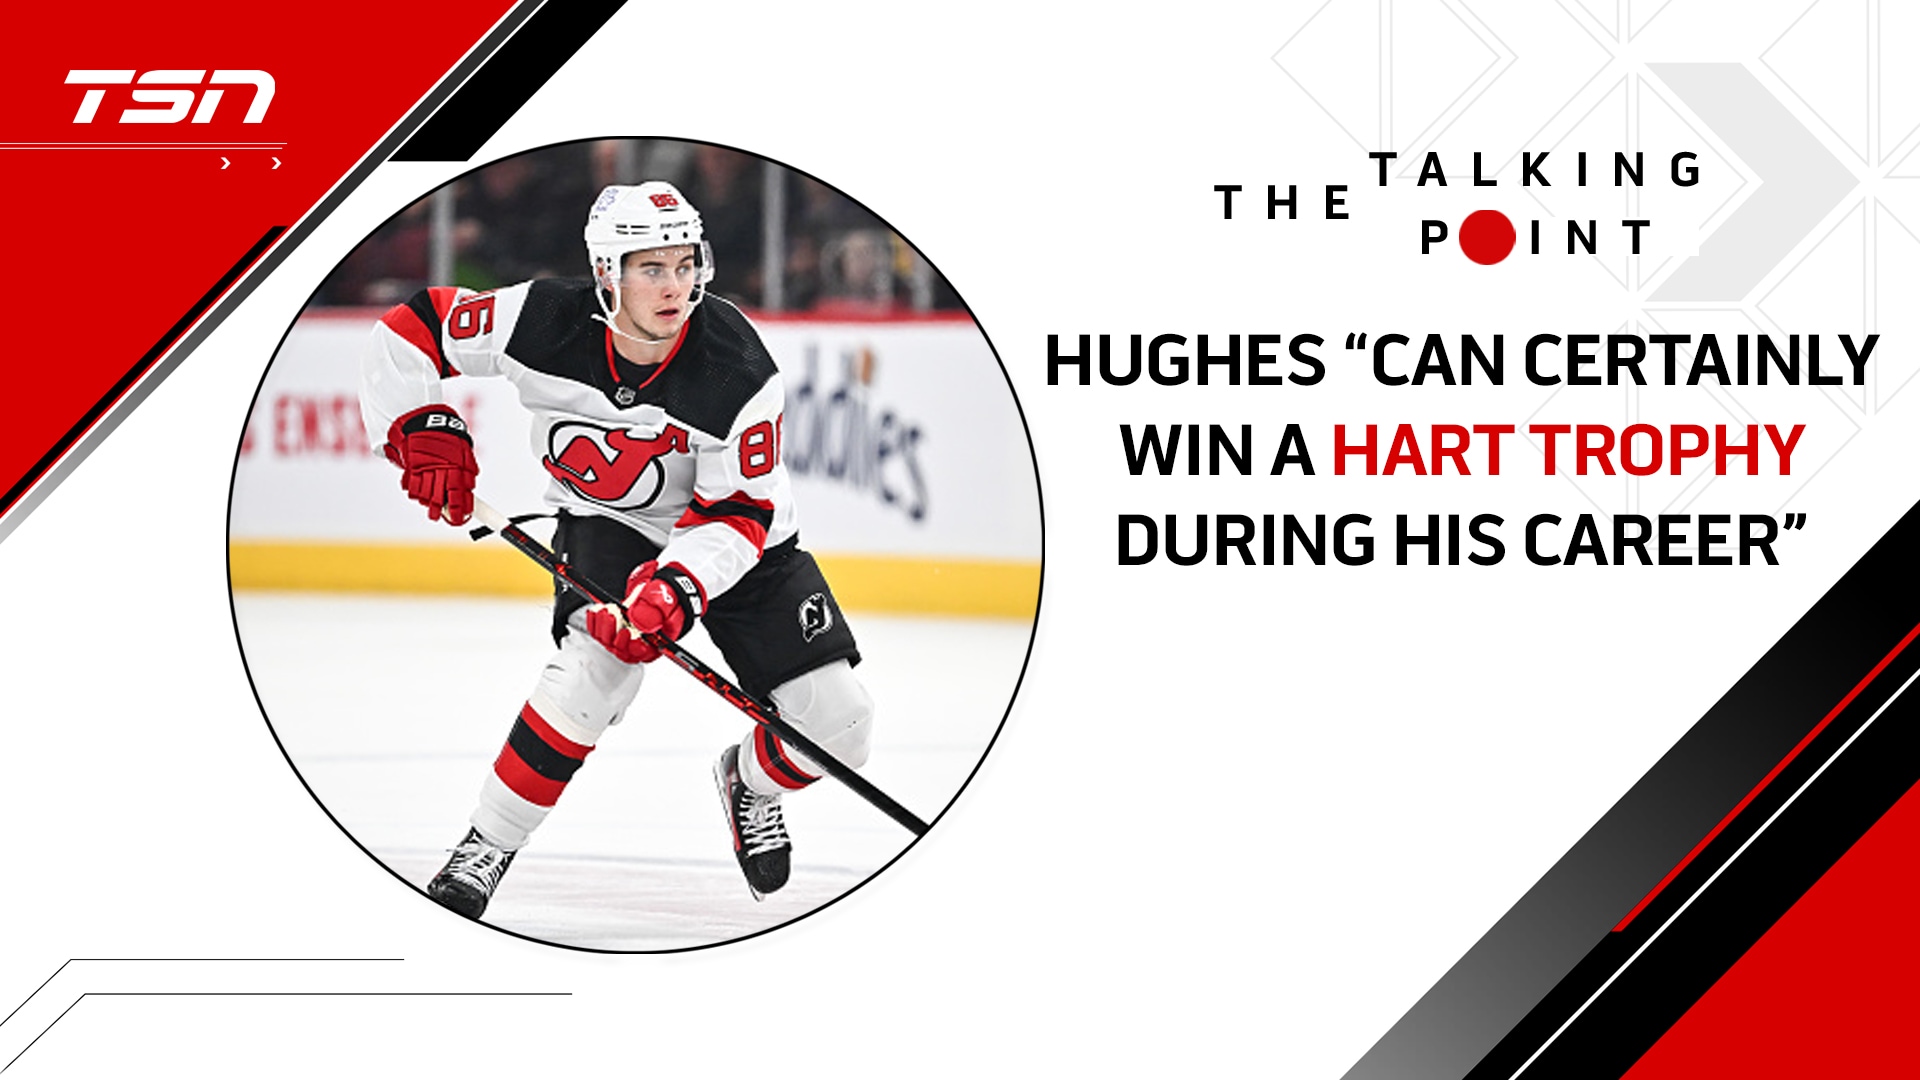 Jack Hughes scores a highlight reel goal in Devils rout of Canucks, former  '19 top pick establishing himself as a superstar